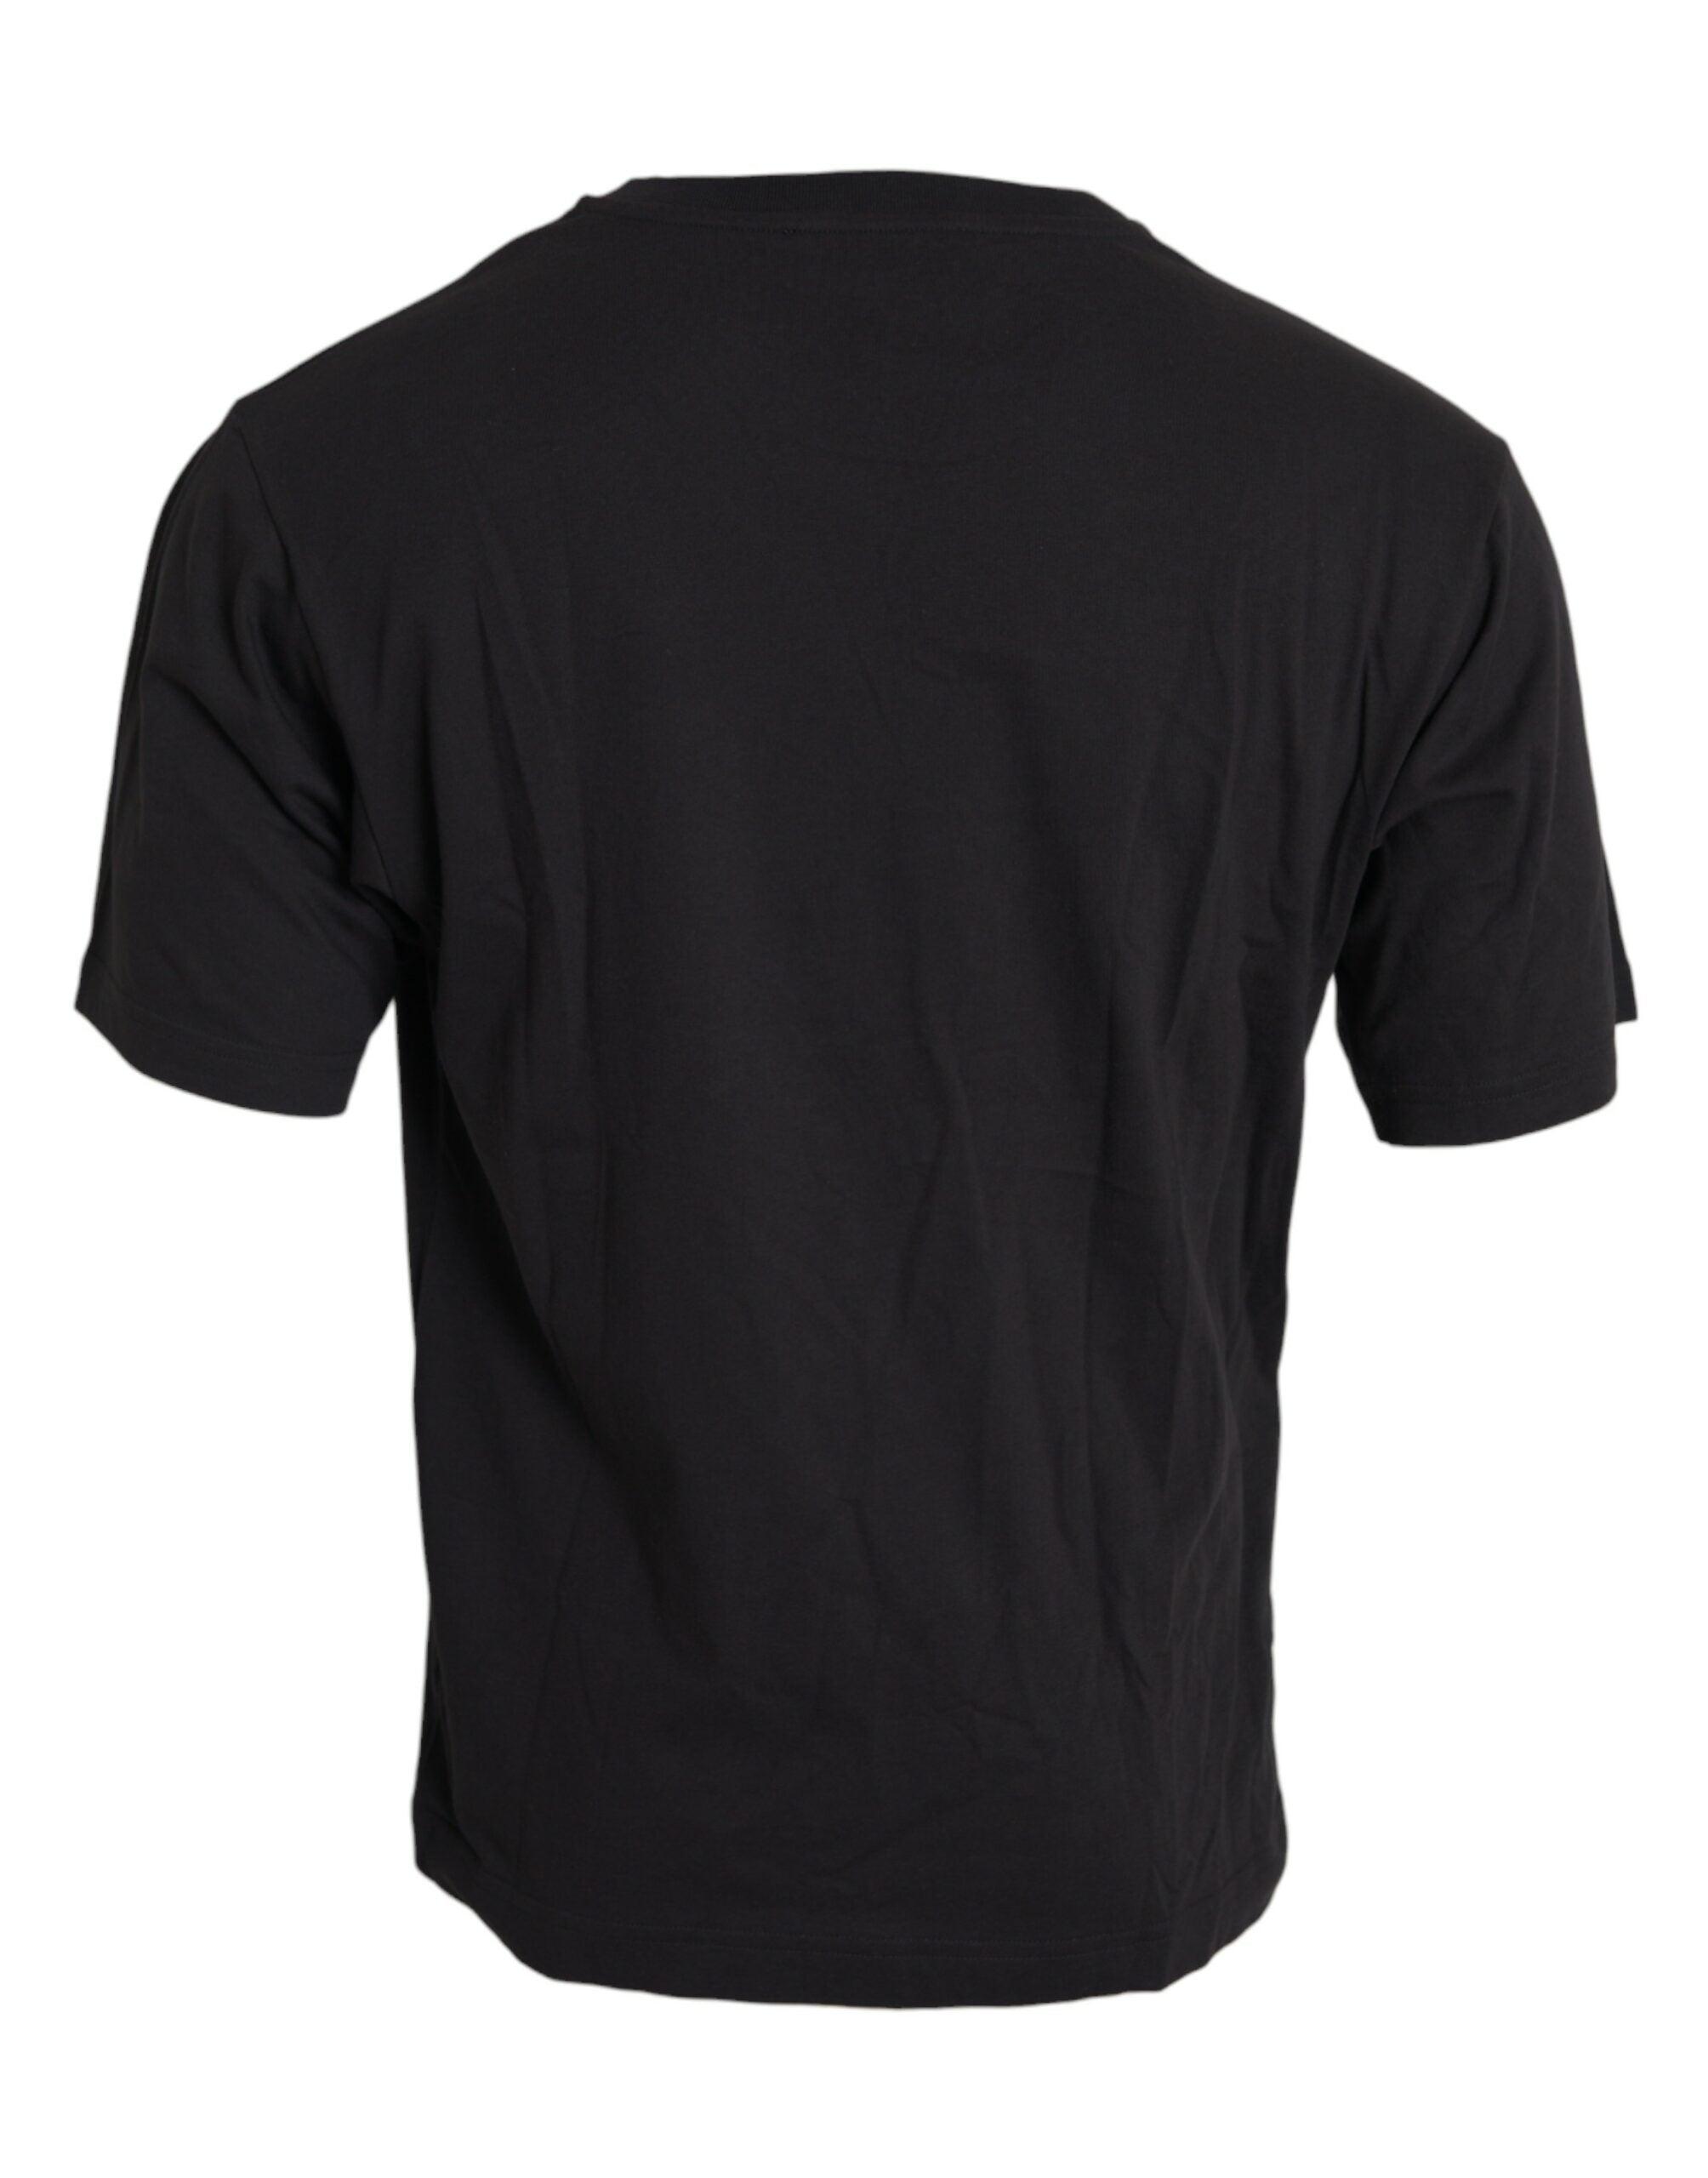 Black Printed Pocket Cotton Crewneck T-shirt - Divitiae Glamour